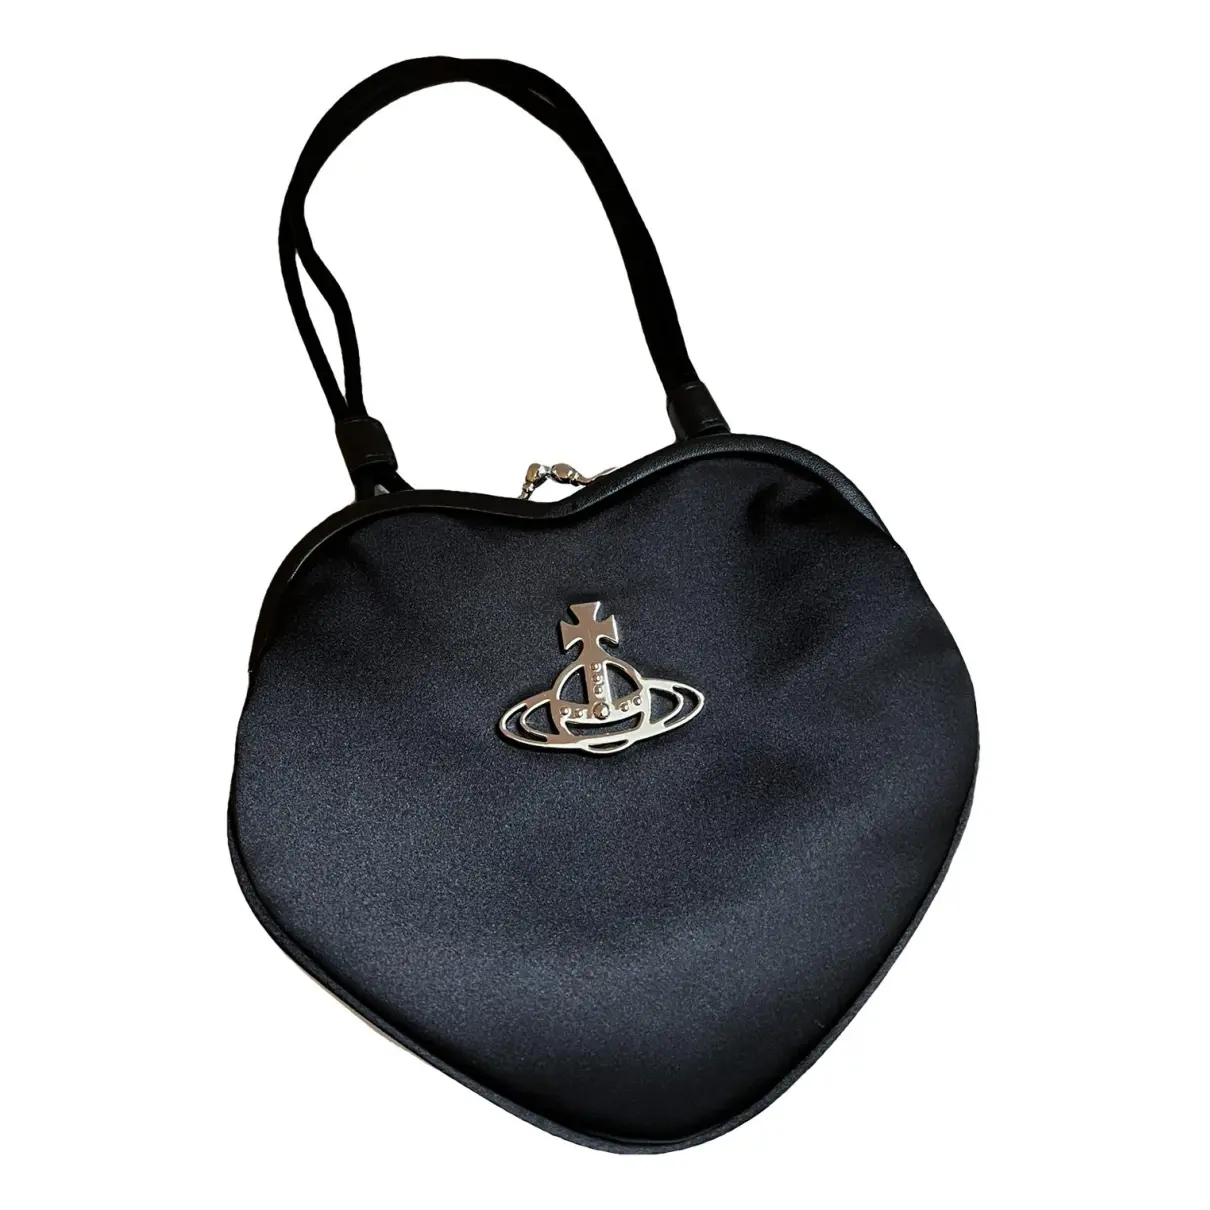 Chancery Heart handbag Vivienne Westwood